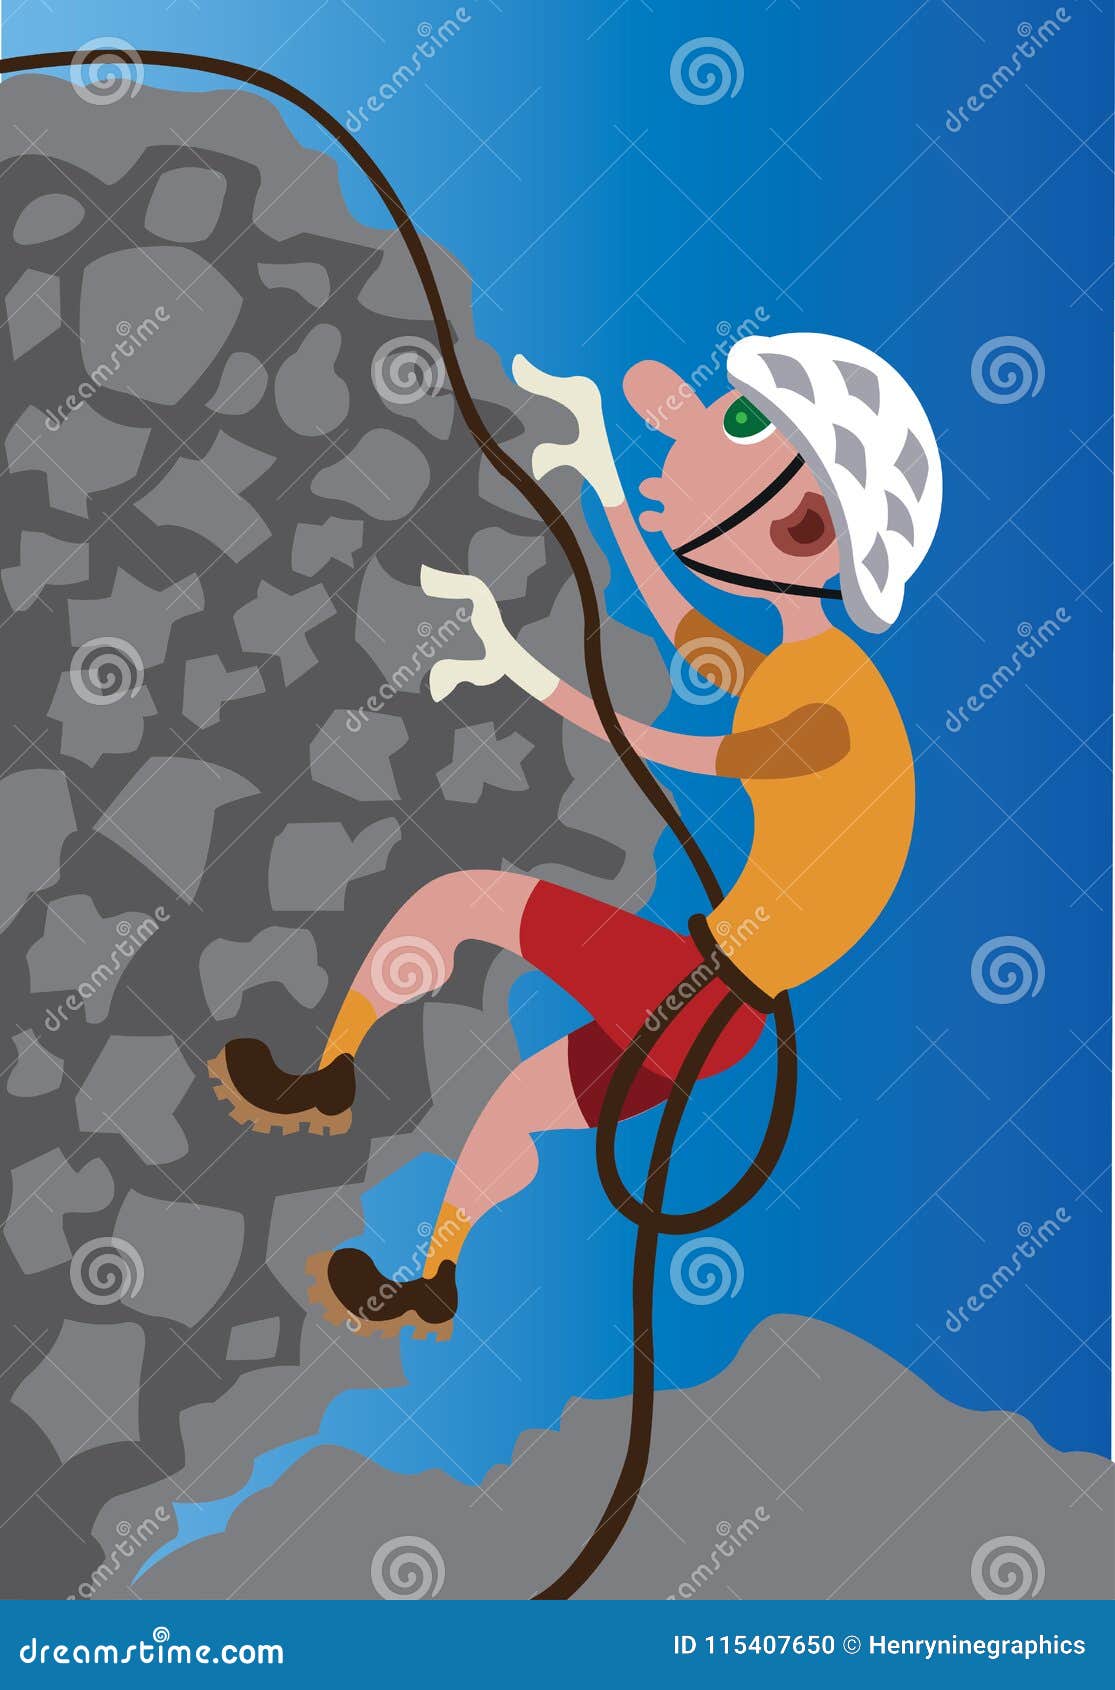 Rock Climbing for fun stock vector. Illustration of dangerous - 115407650